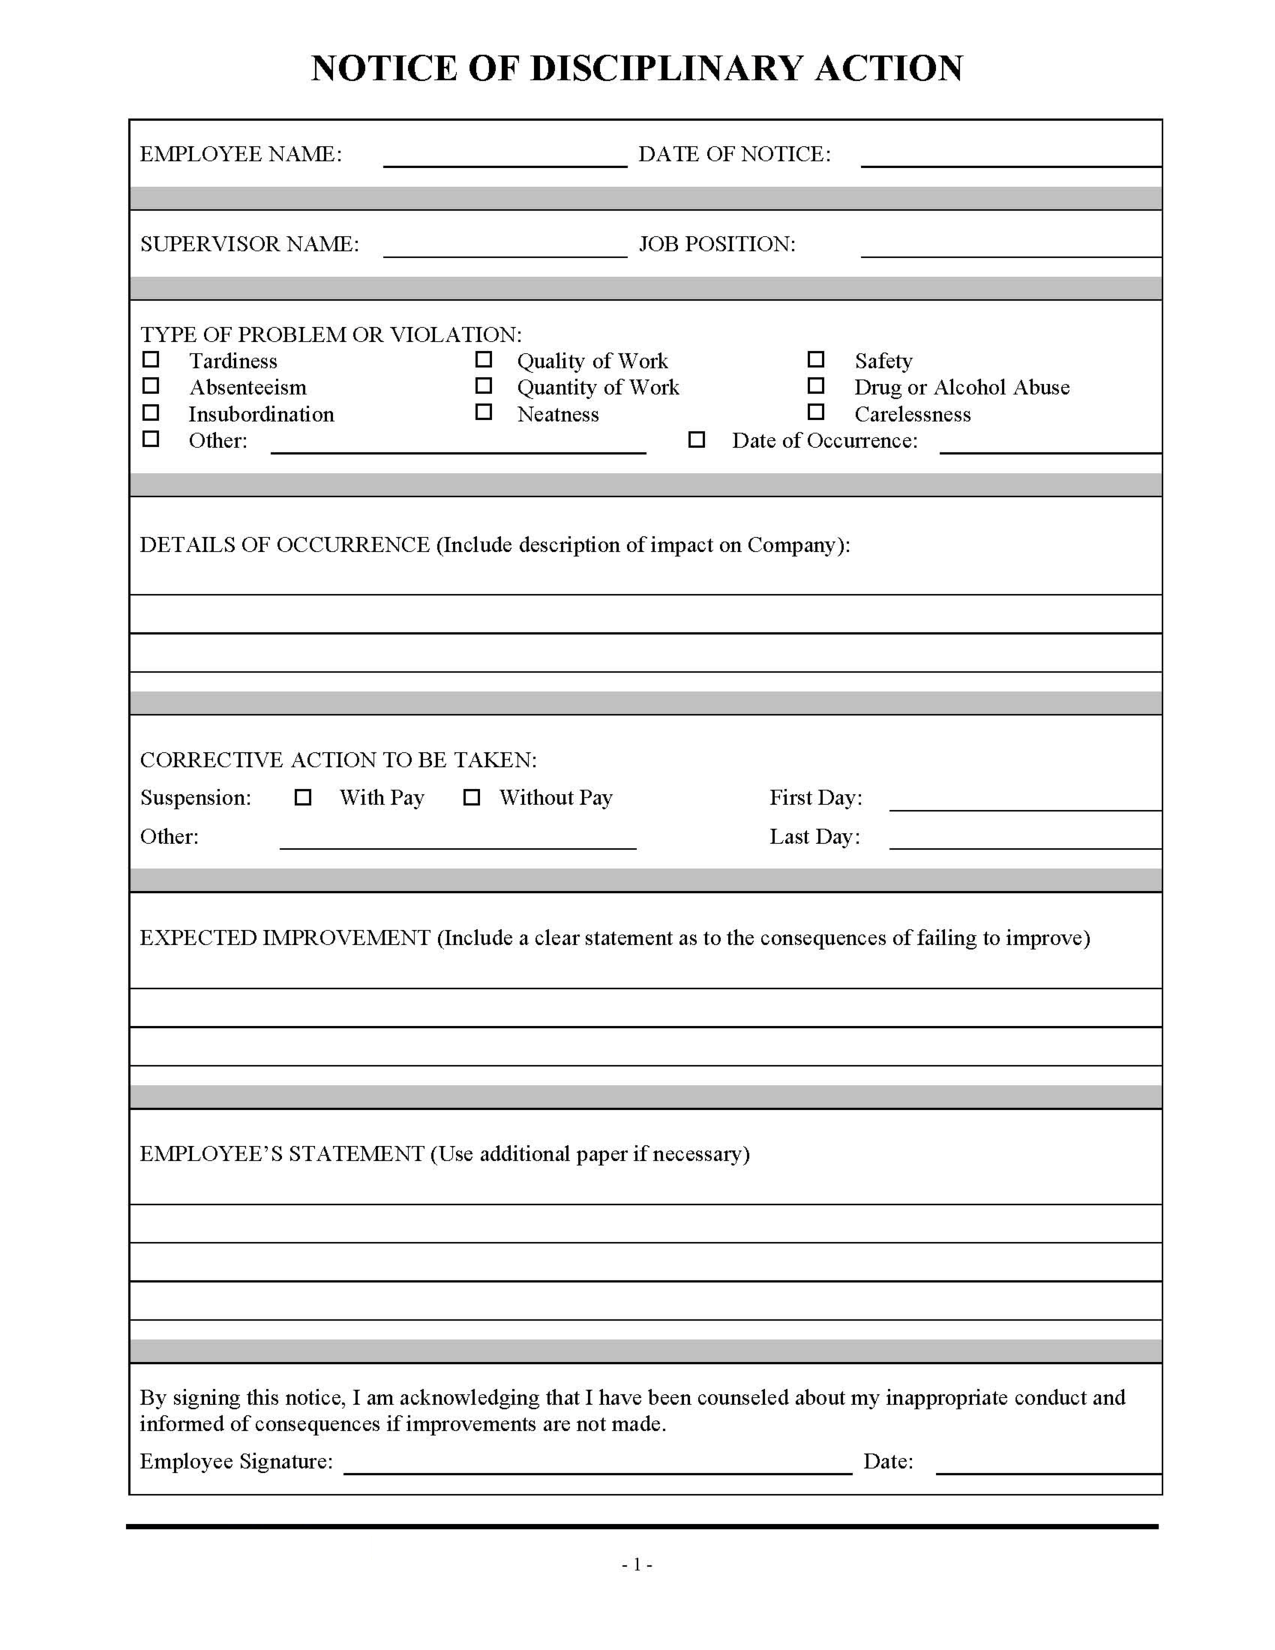 employee disciplinary form template employee discipline form 